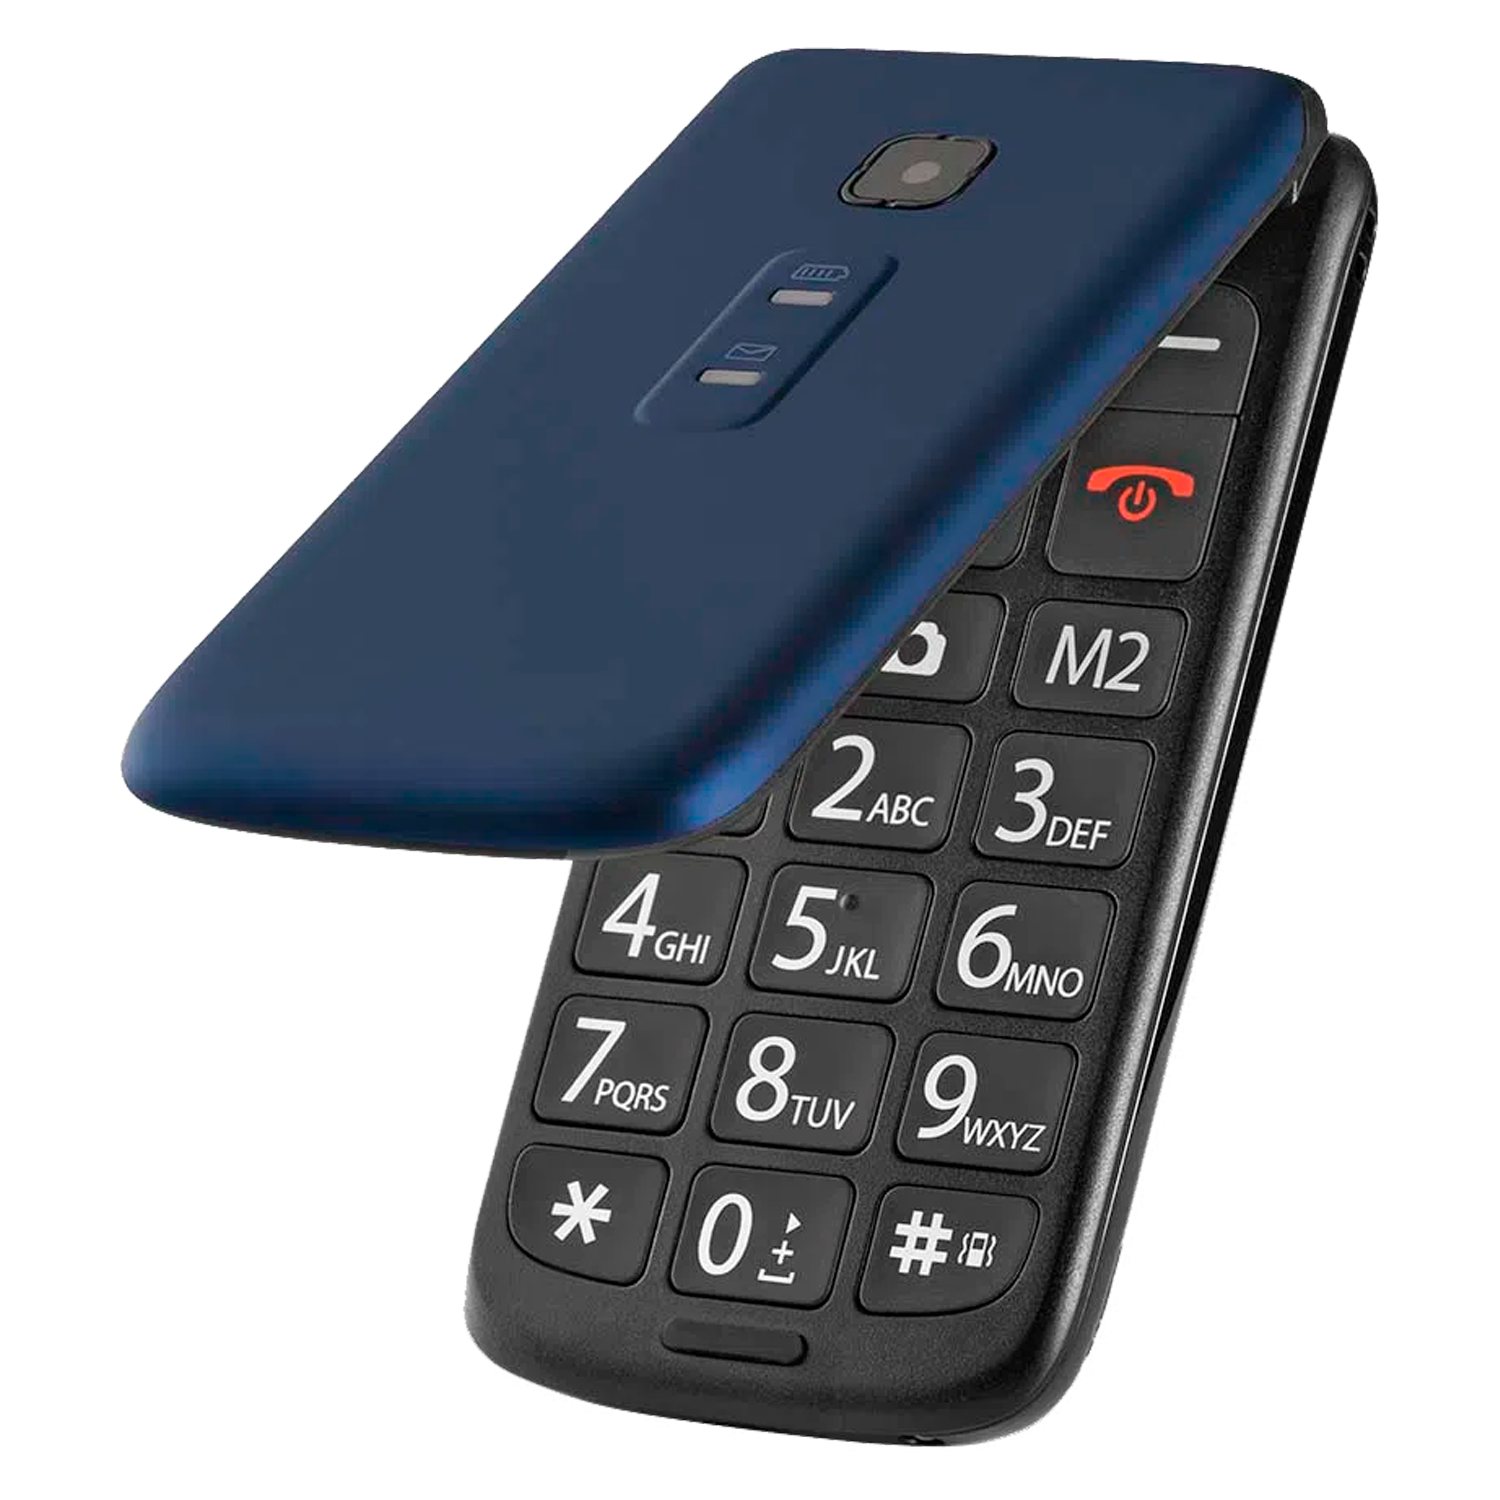 Celular Multilaser Flip Vita P9020 Dual SIM Tela 2.4" - Azul (Anatel)